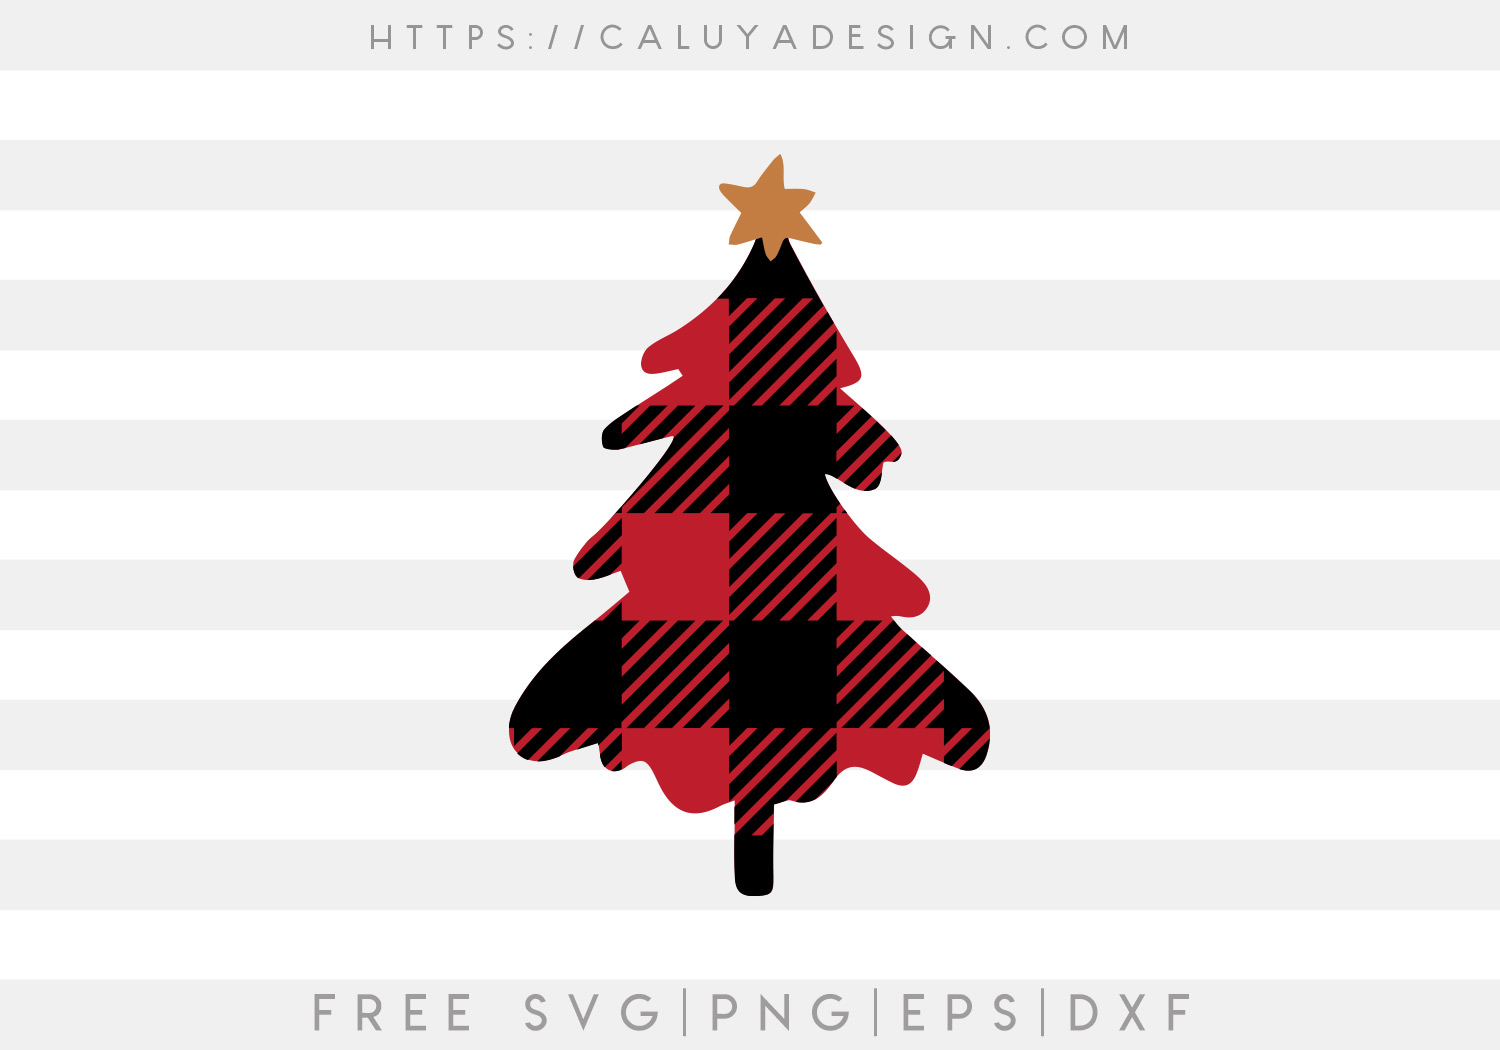 Plaid Tree SVG, PNG, EPS & DXF